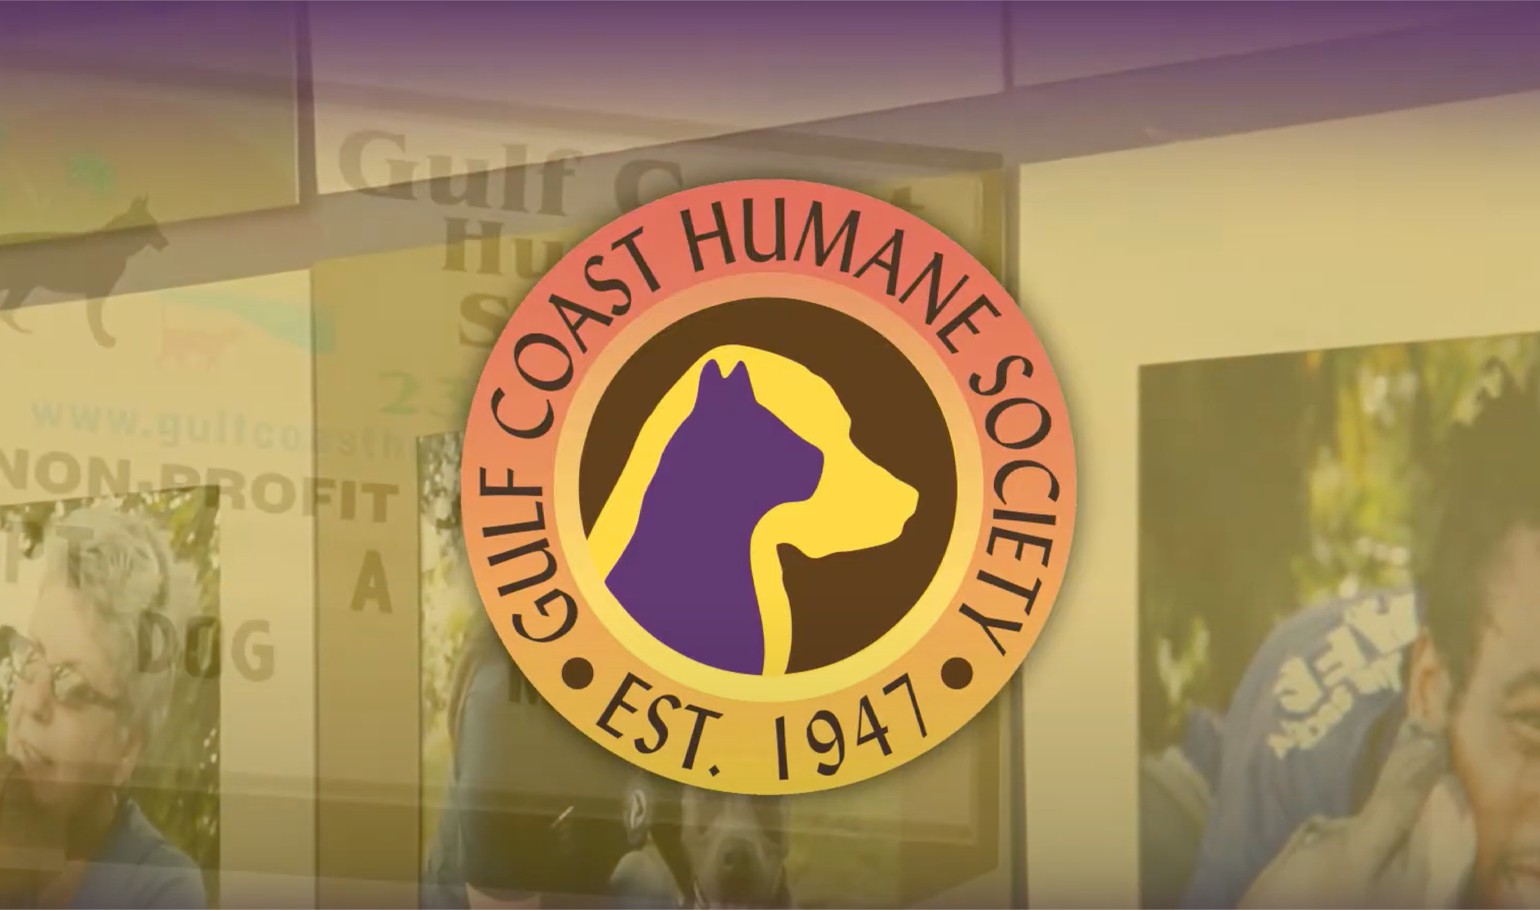 Coast humane society kinzer adventist health portland